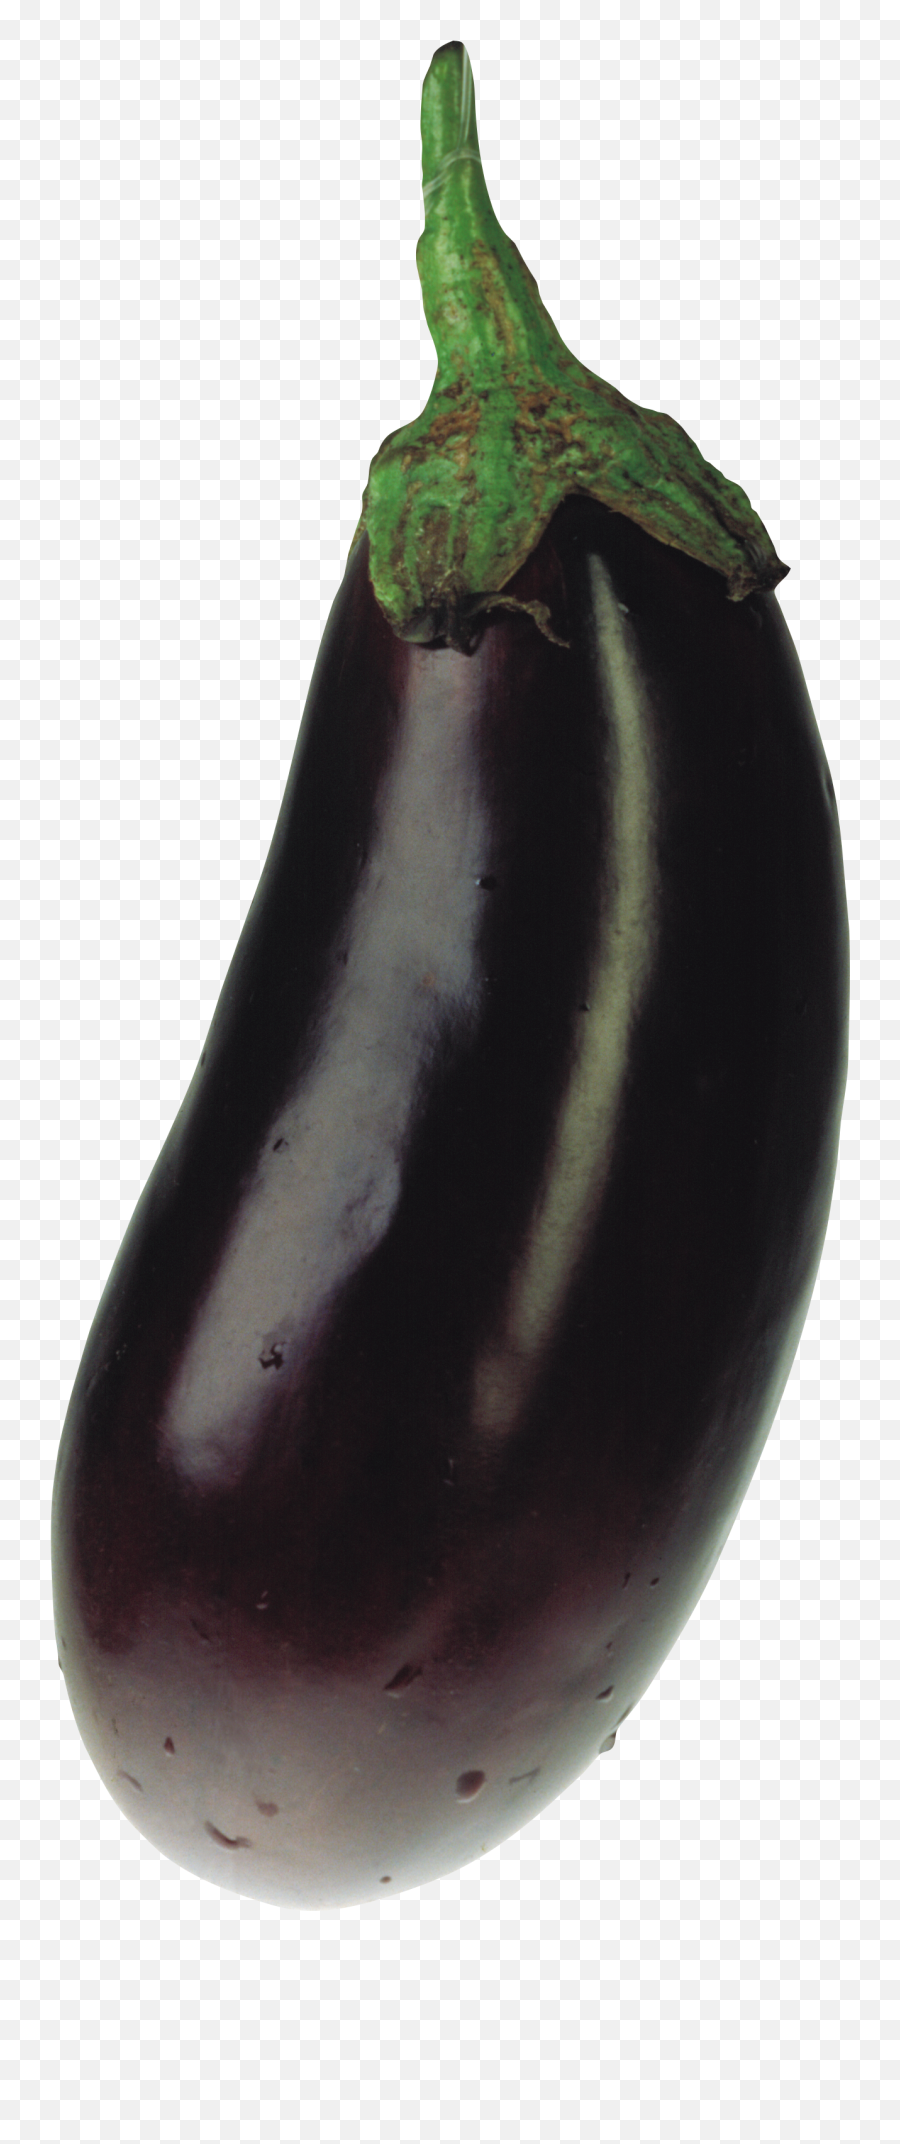 Eggplant Png Images Free Download - Transparent Background Eggplant Png Emoji,What Does An Eggplant Emoji Mean